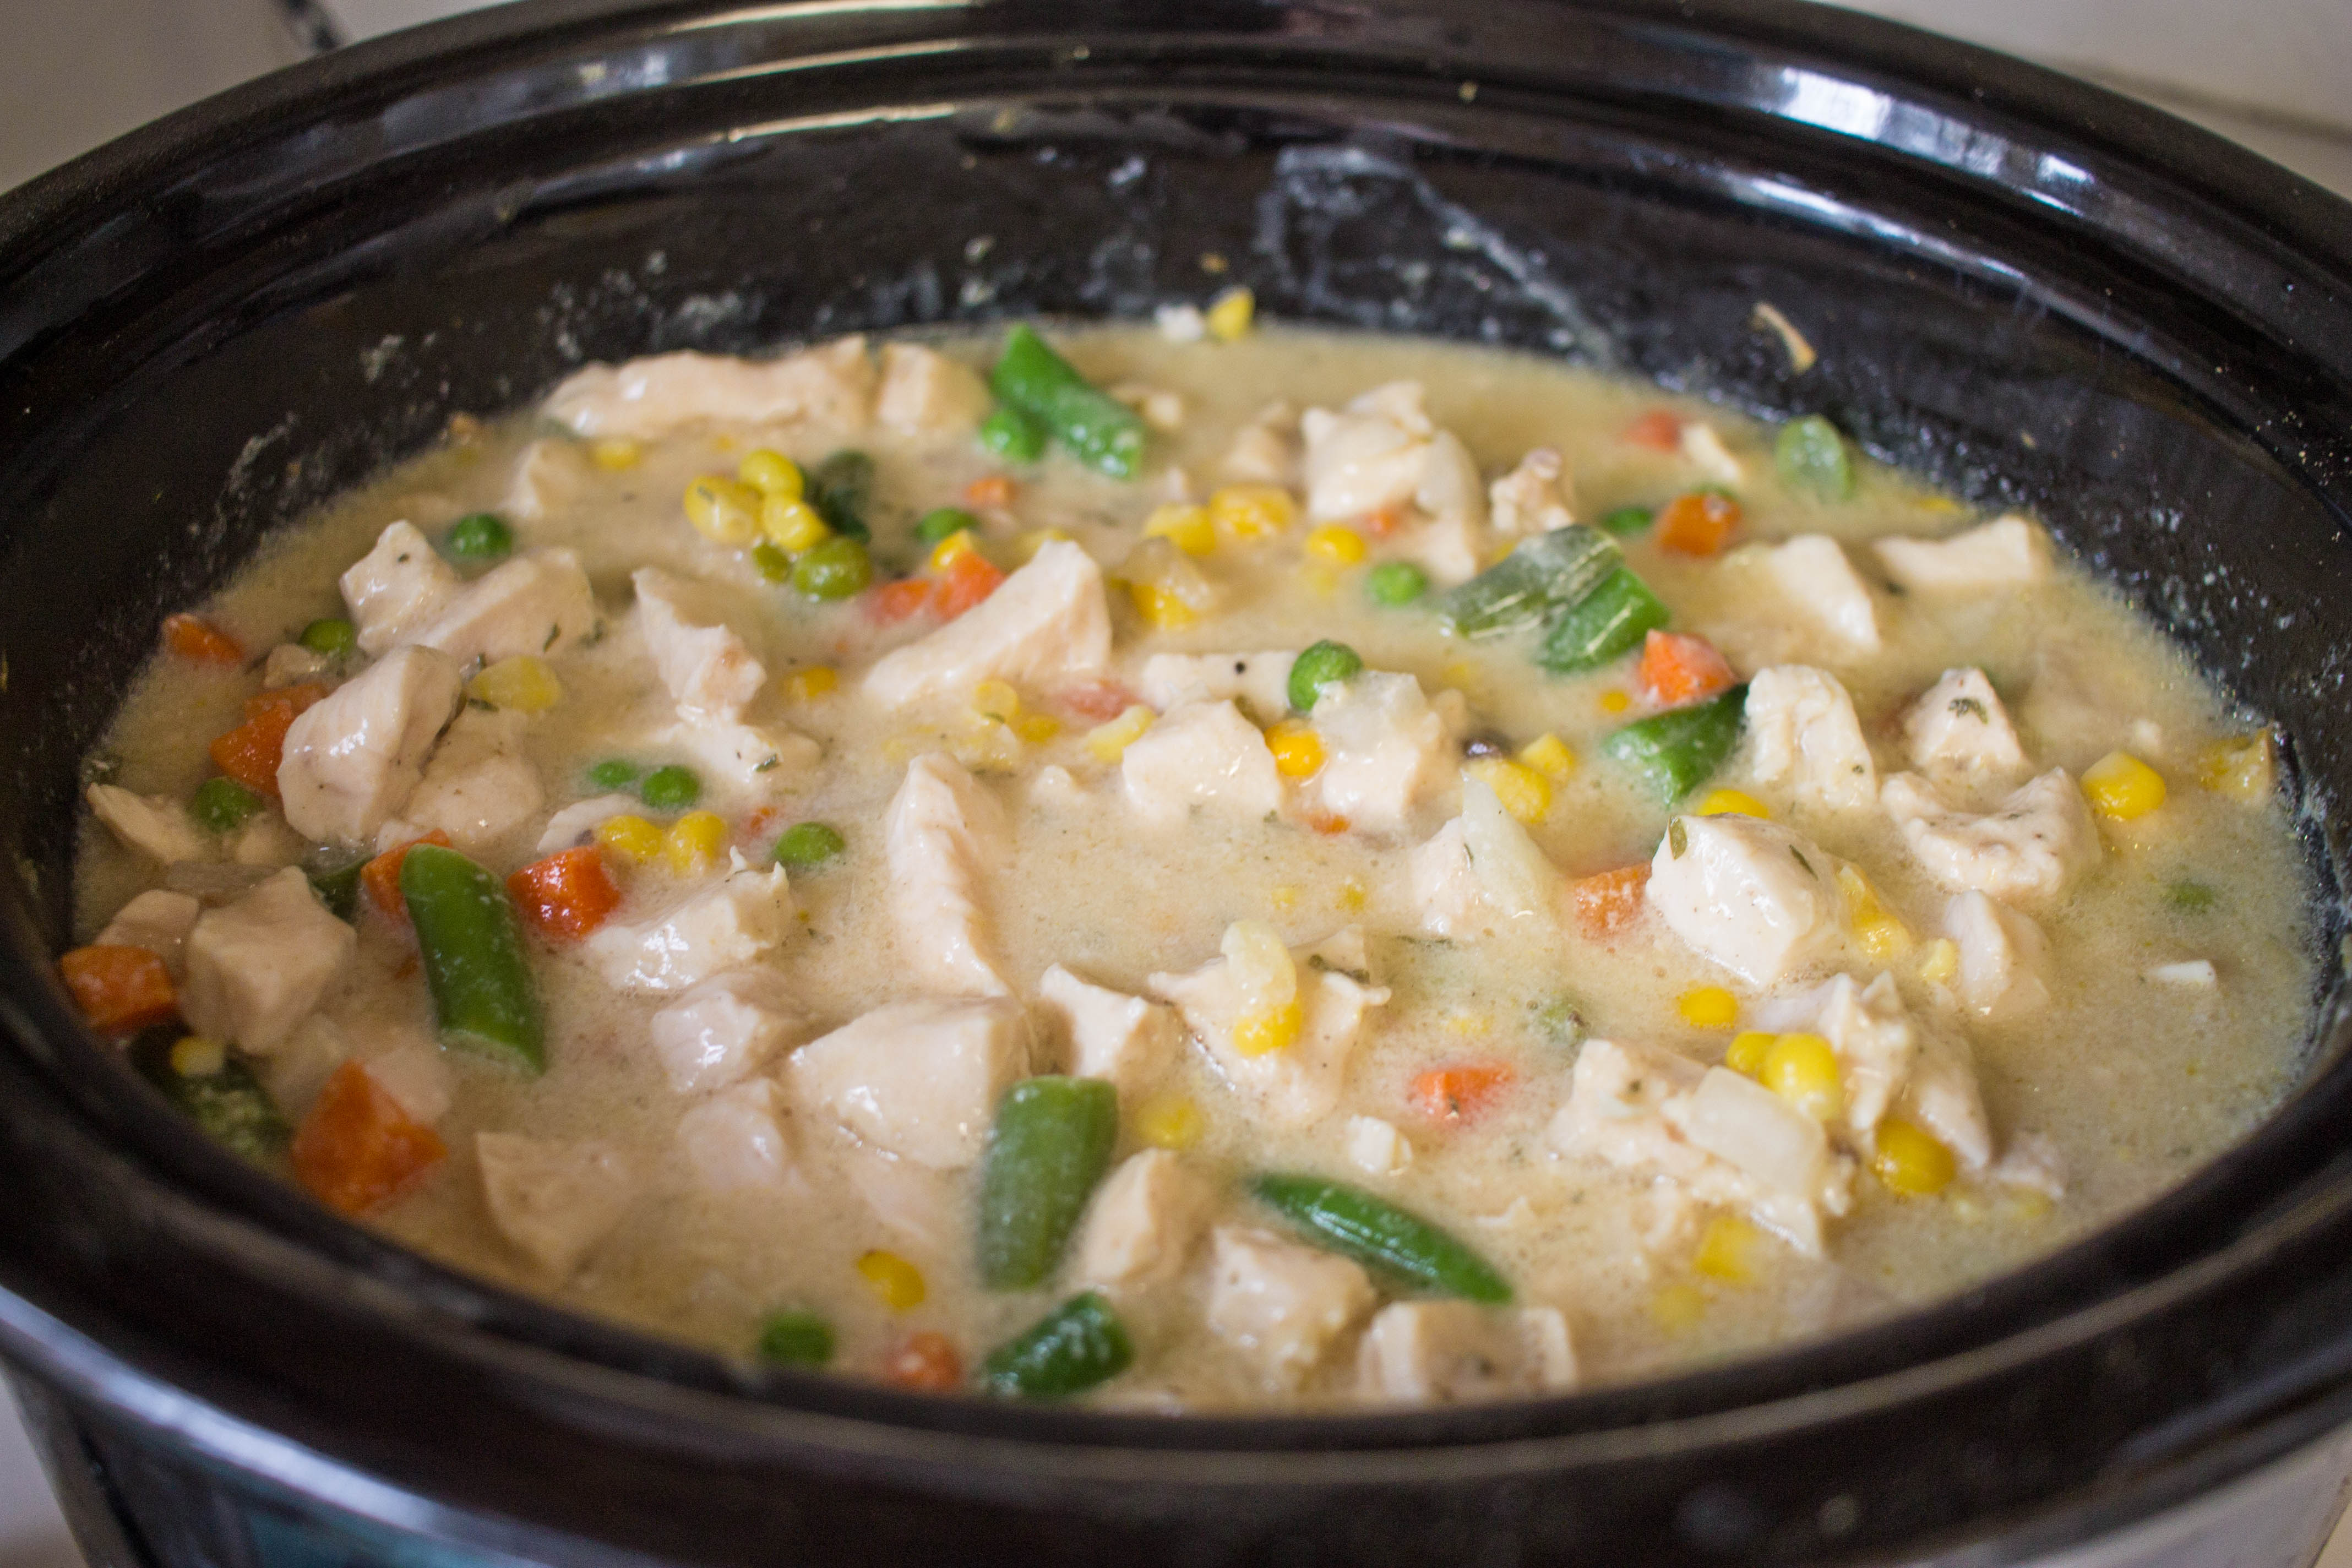 ingredients for crock pot chicken and dumplings cooking in the pot